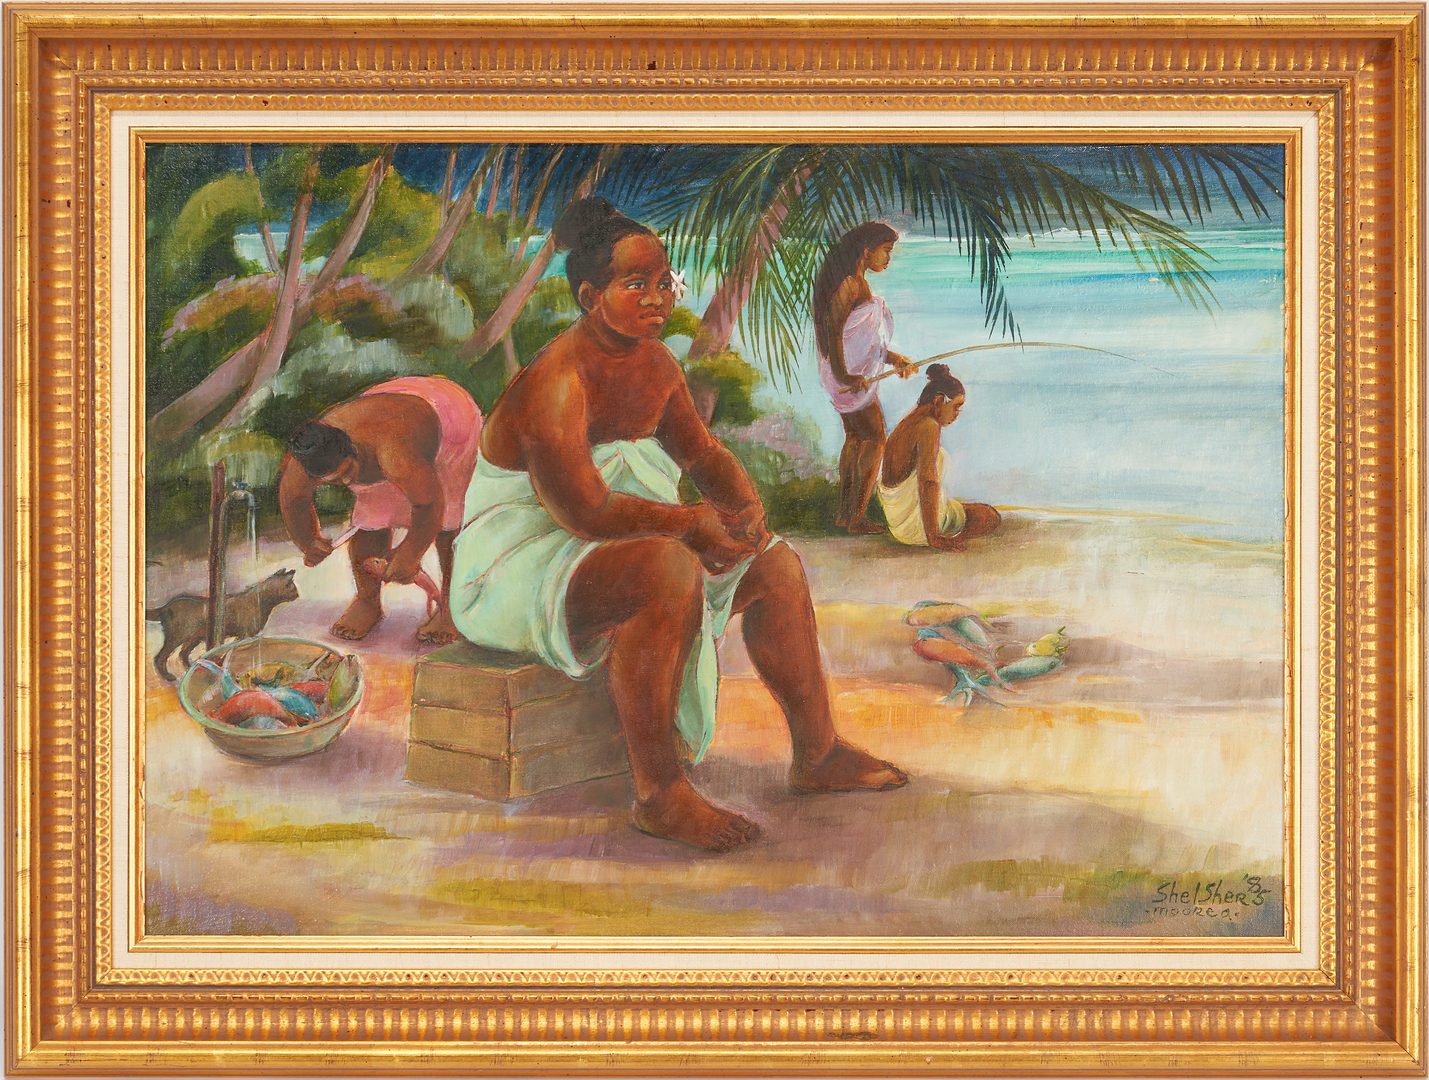 Lot 825: Jean Shelsher O/P French Polynesian Painting, Moorea